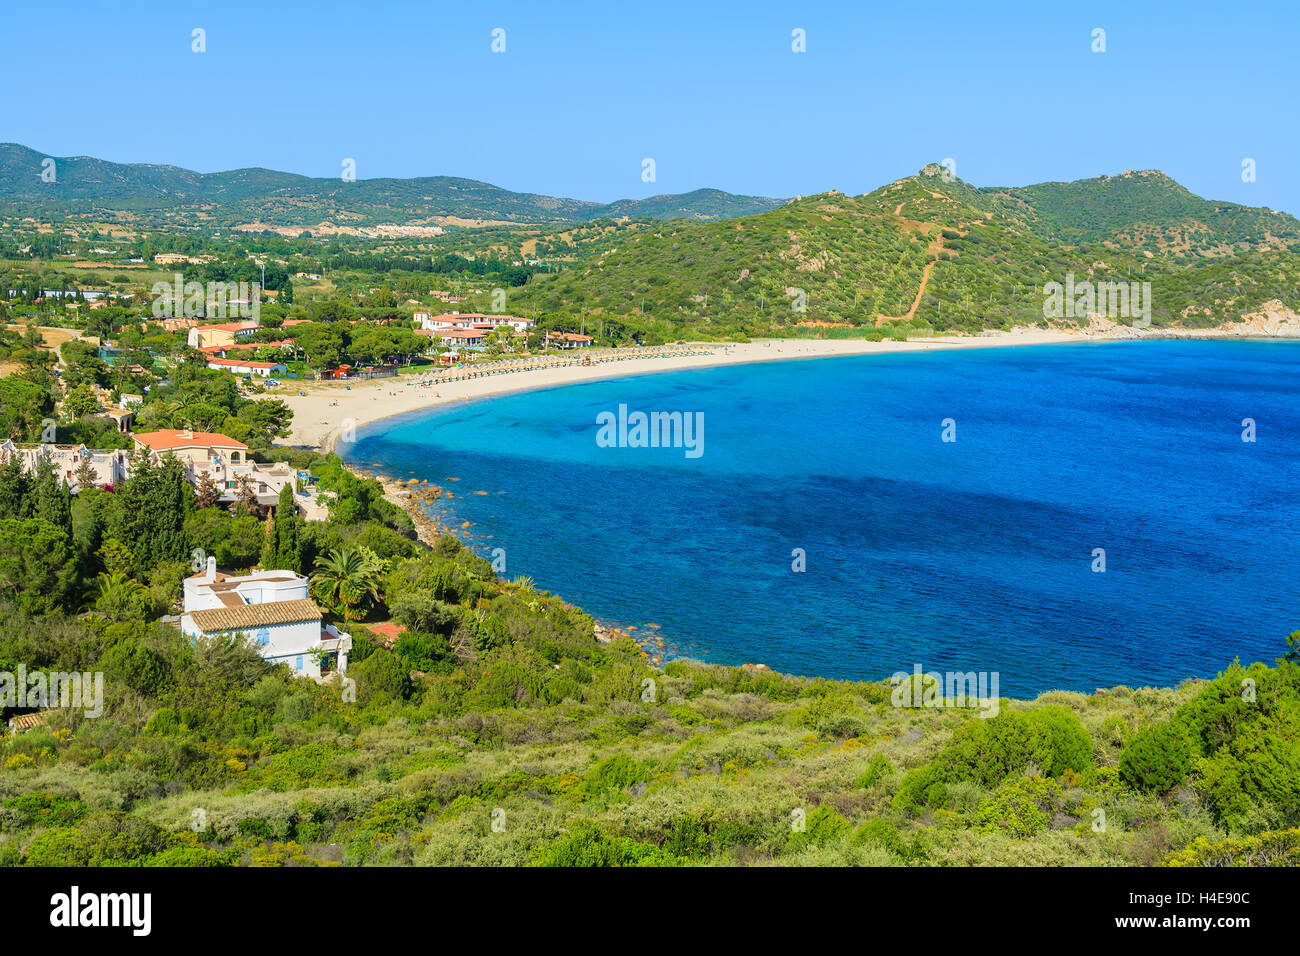 Coast of Sardinia island with view of beautiful Capo Boi bay, Italy Stock Photo